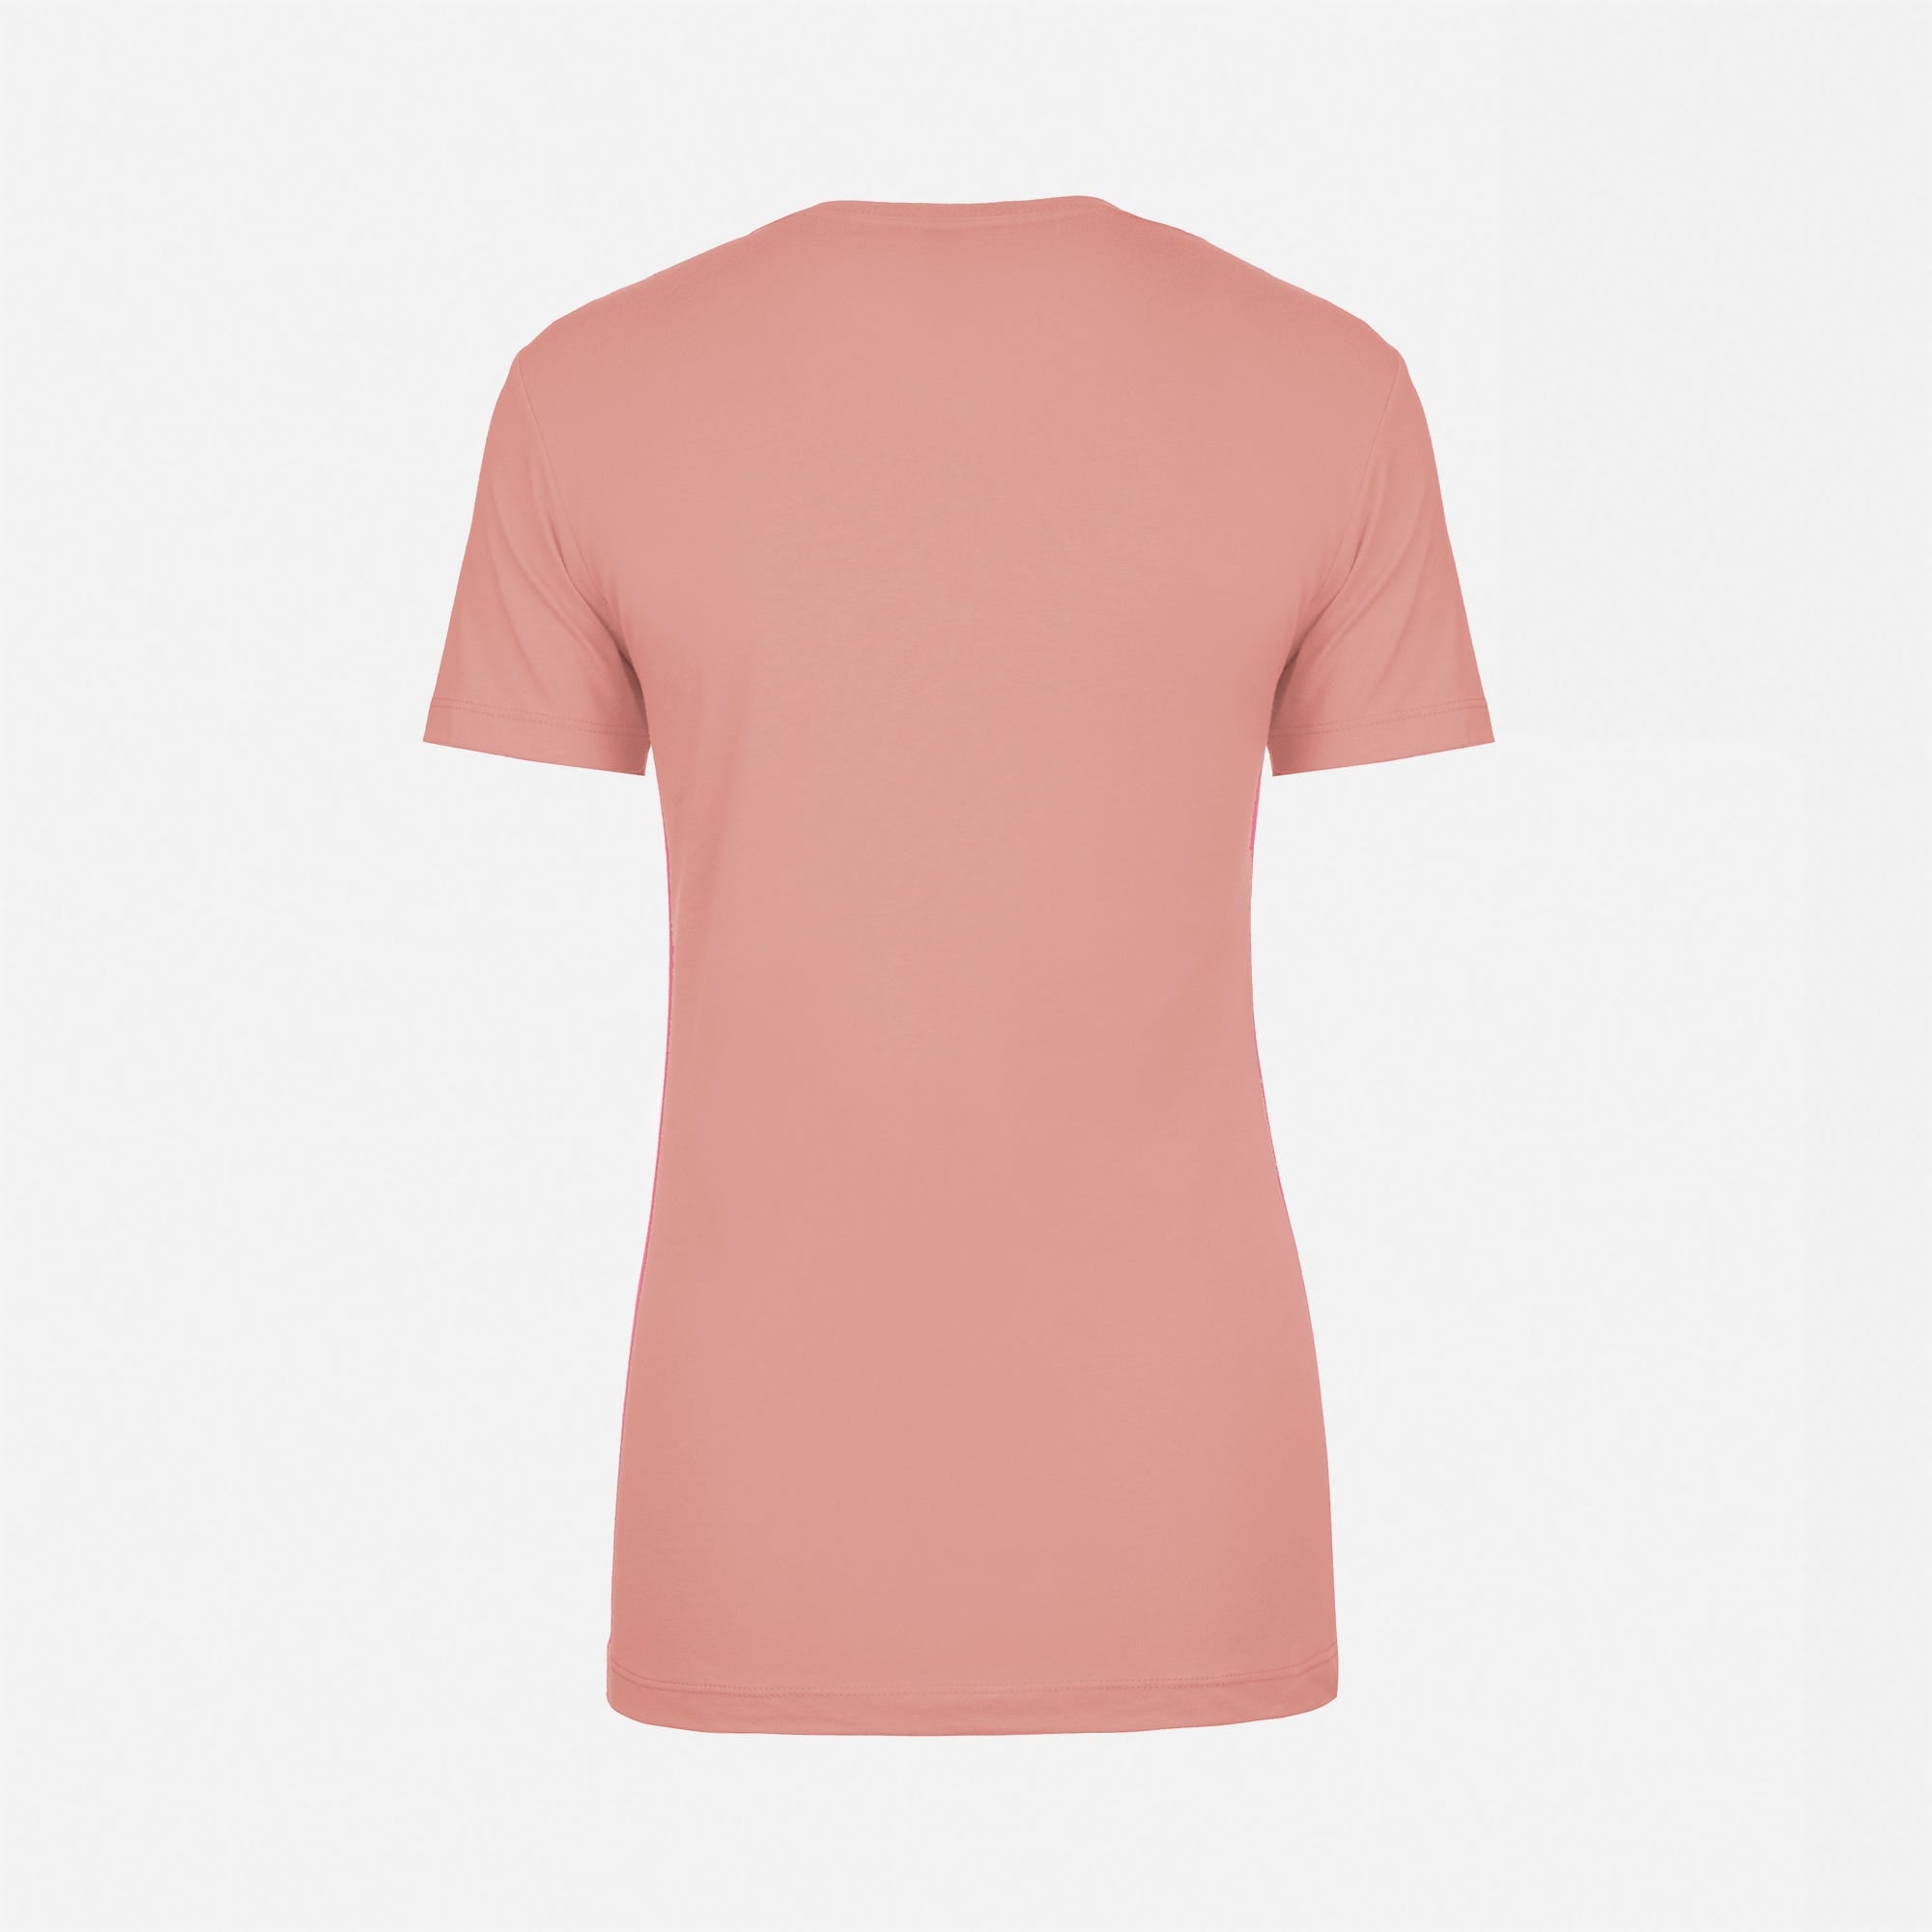 Cotton Boyfriend T-Shirt Desert Pink 3900 Next Level Apparel Back View 